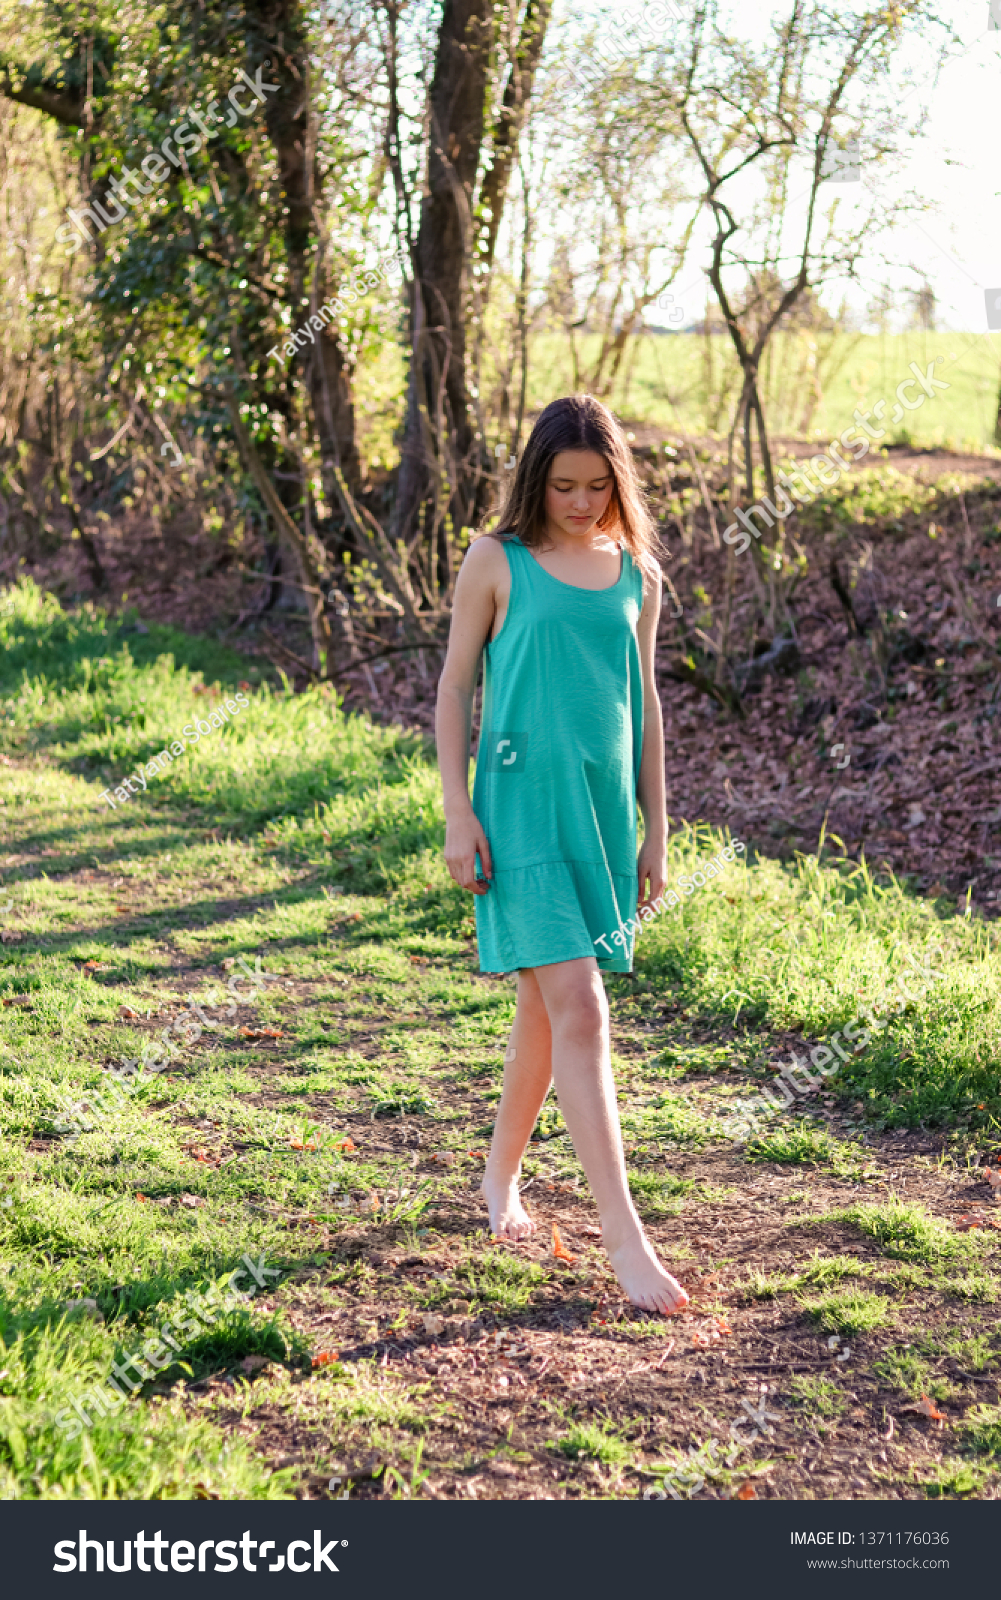 https://image.shutterstock.com/shutterstock/photos/1371176036/display_1500/stock-photo-beautiful-preteen-romantic-girl-in-turquoise-dress-walking-barefoot-on-dirt-road-with-green-grass-1371176036.jpg